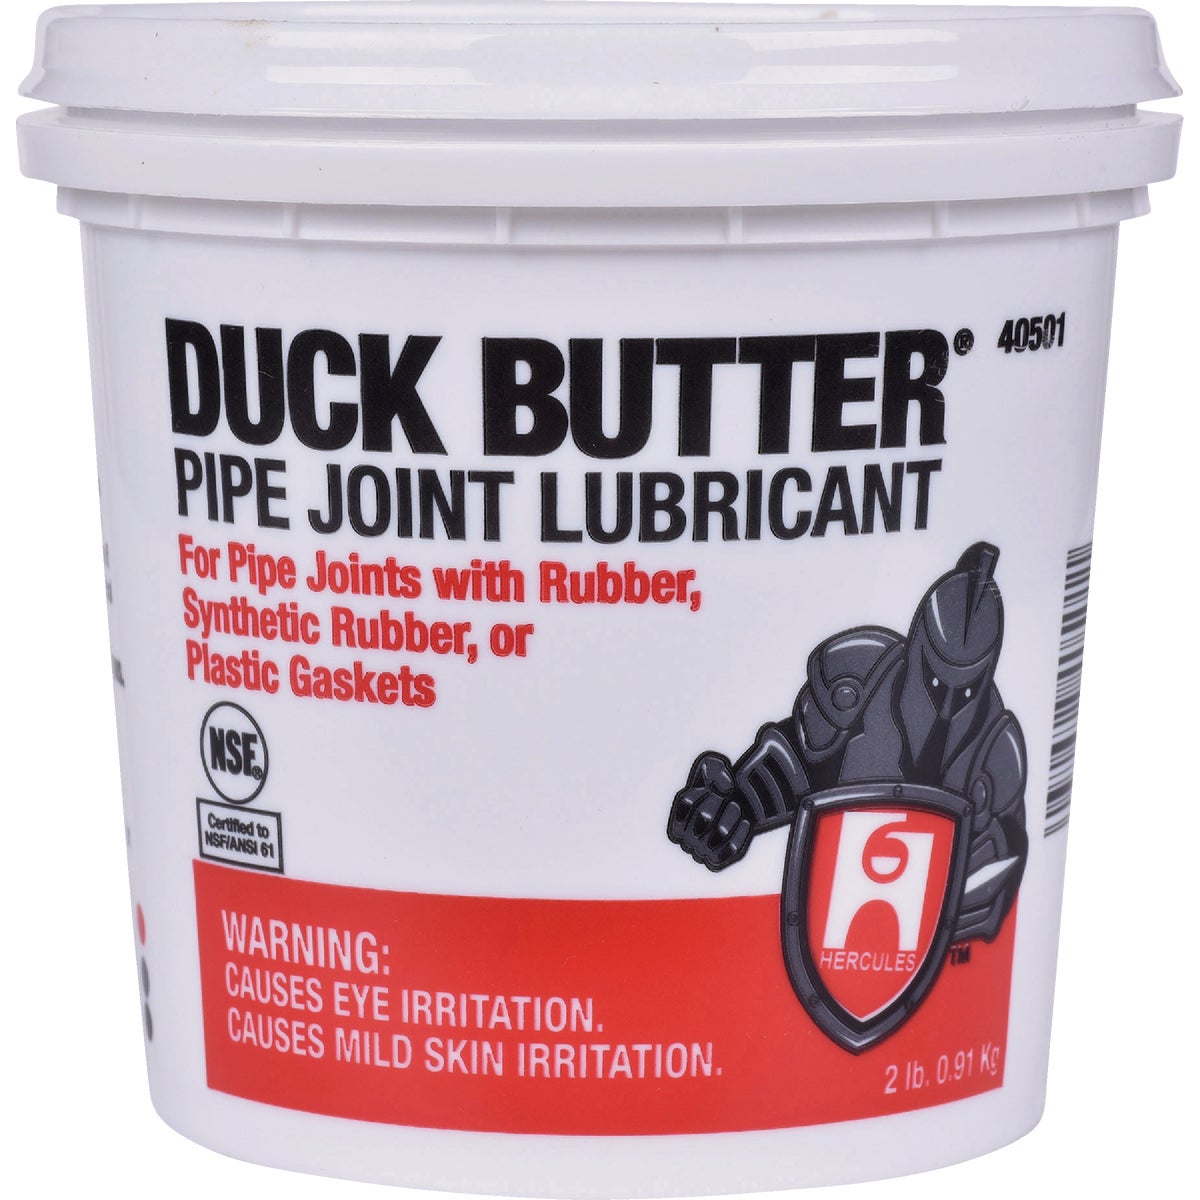 Oatey Hercules Duck Butter 23 Oz. Pipe Joint Lubricant